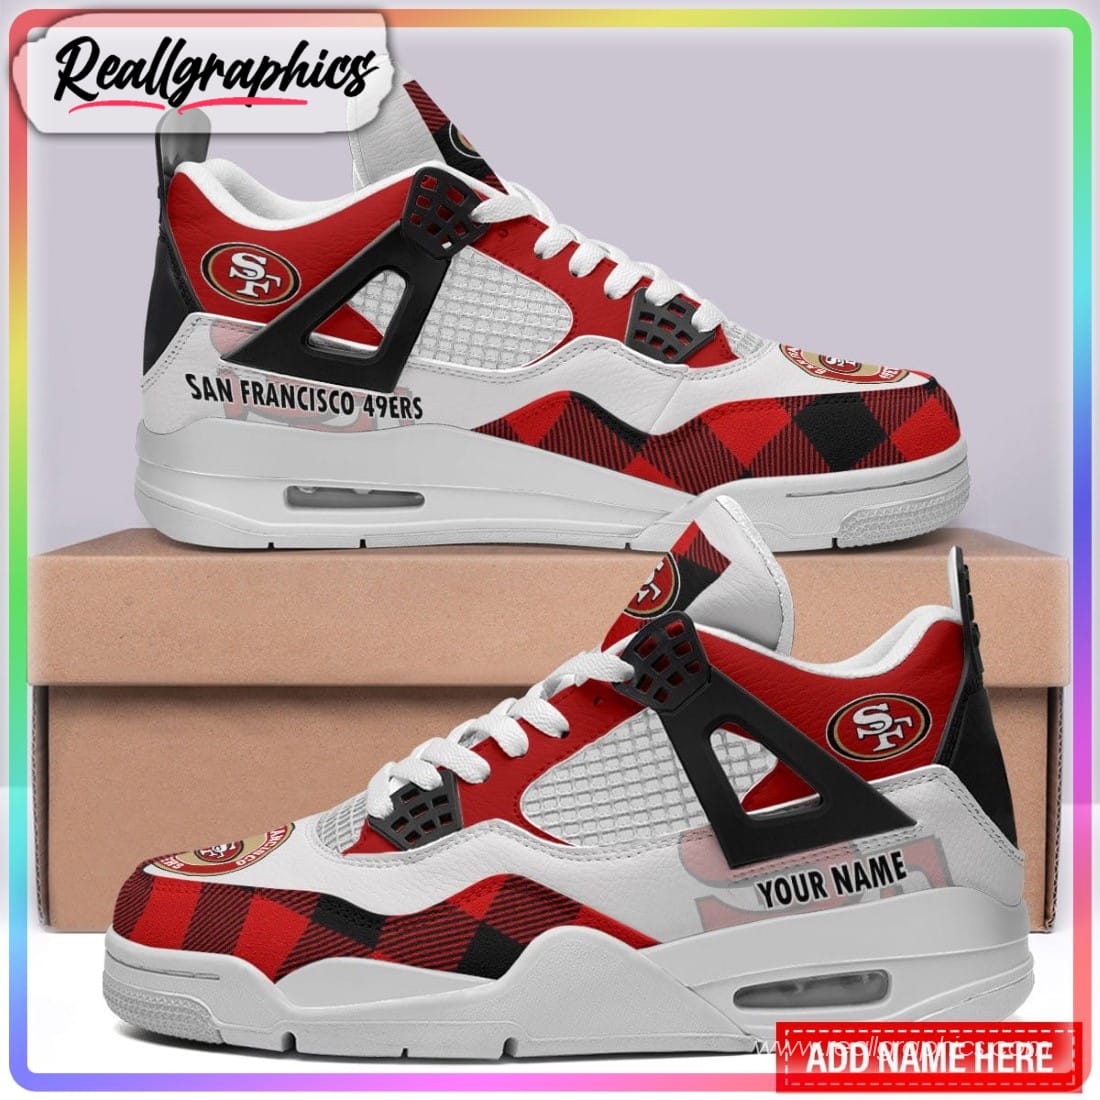 San Francisco 49ers Red Camouflage Custom Air Jordan 4 Sneaker -  Reallgraphics